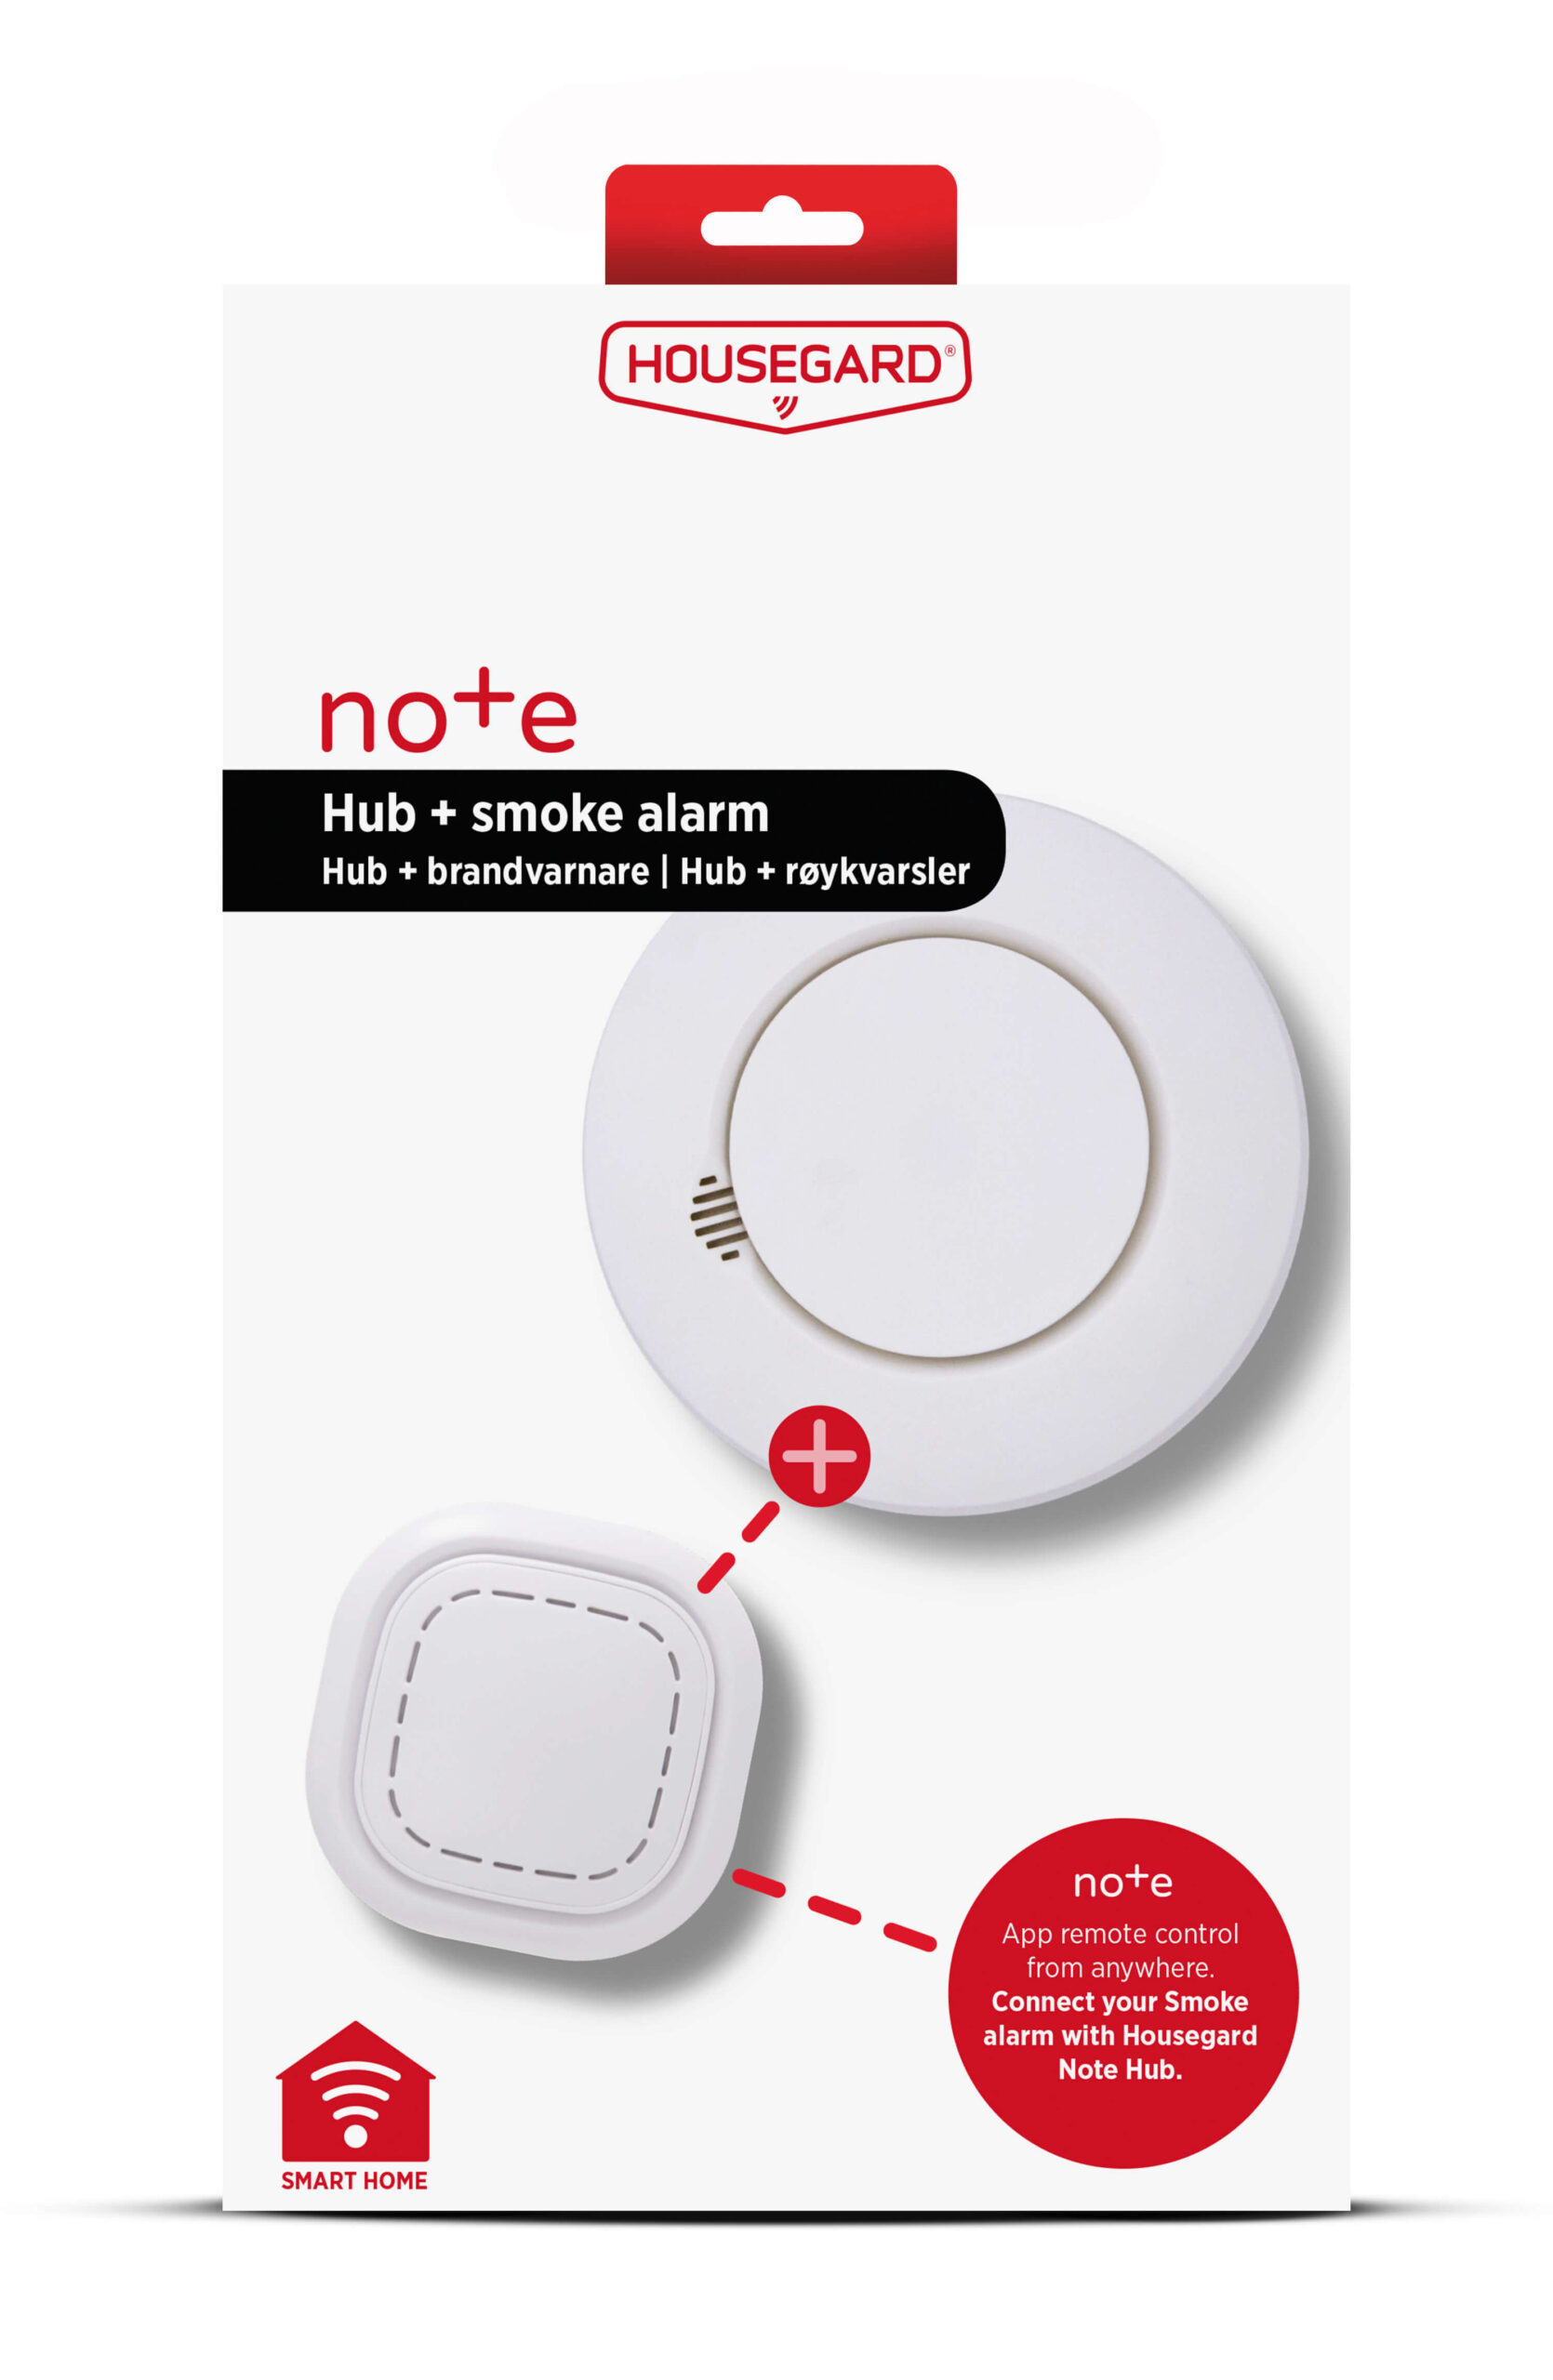 Housegard-note-smart-note-hub-wifi